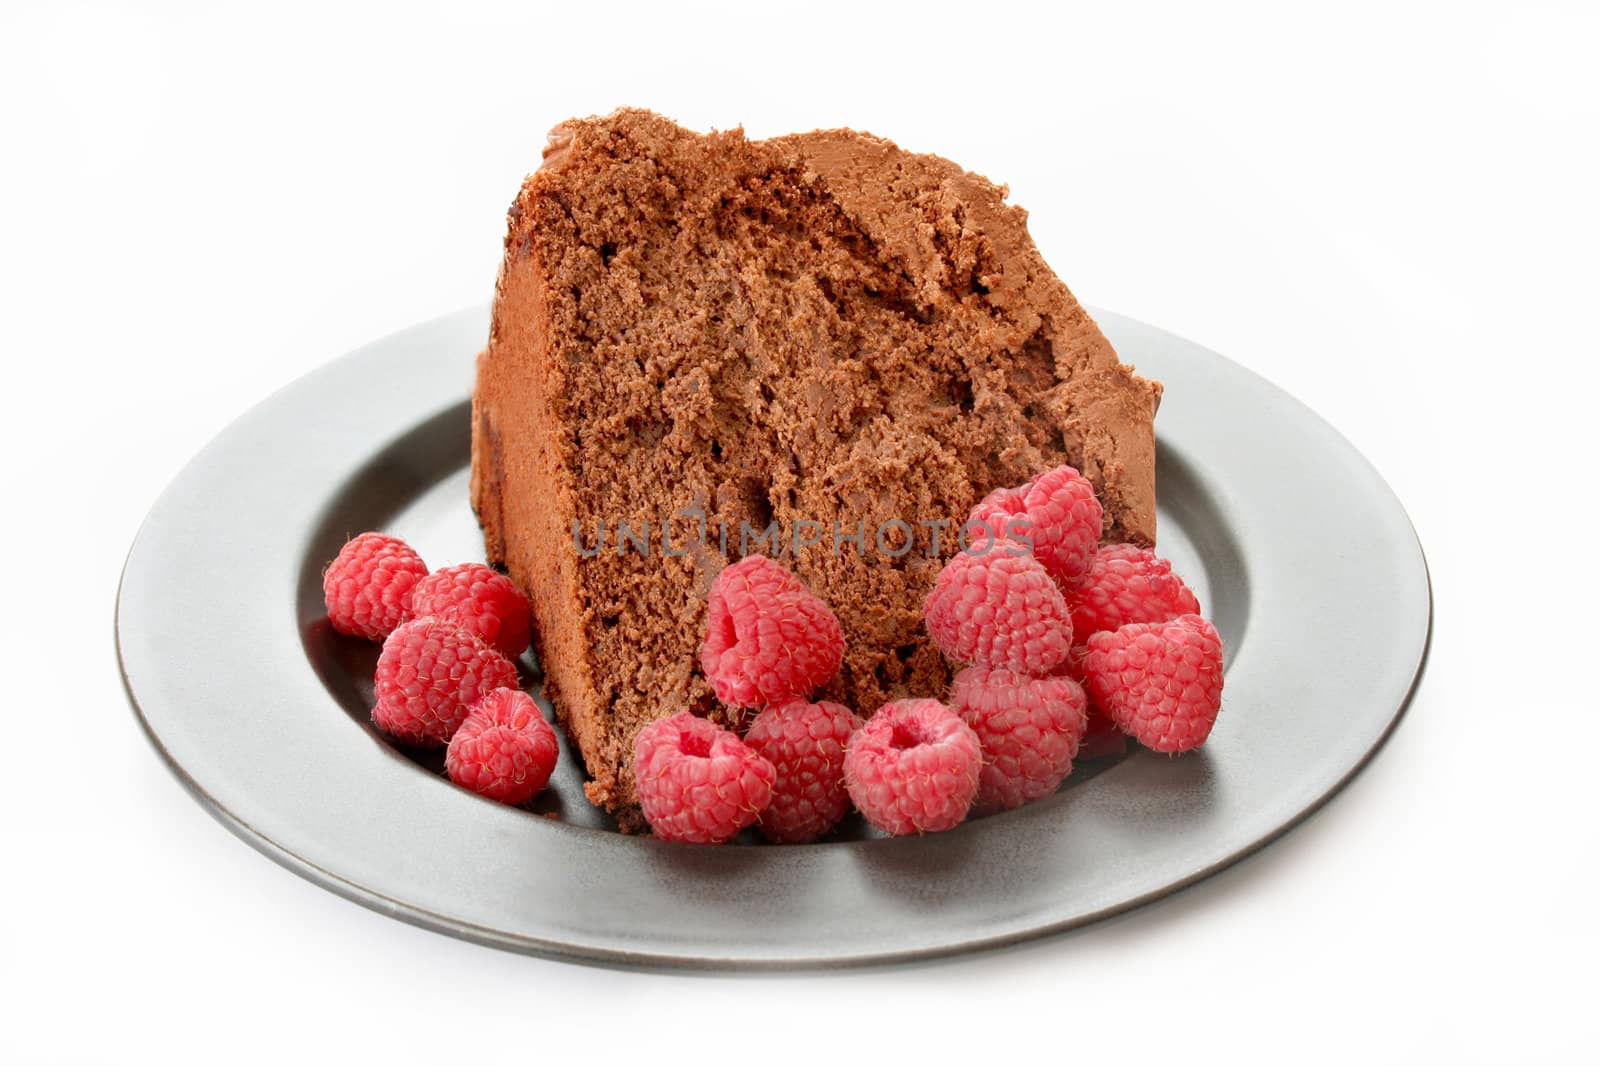 Chocolate Cake and Raspberries by thephotoguy